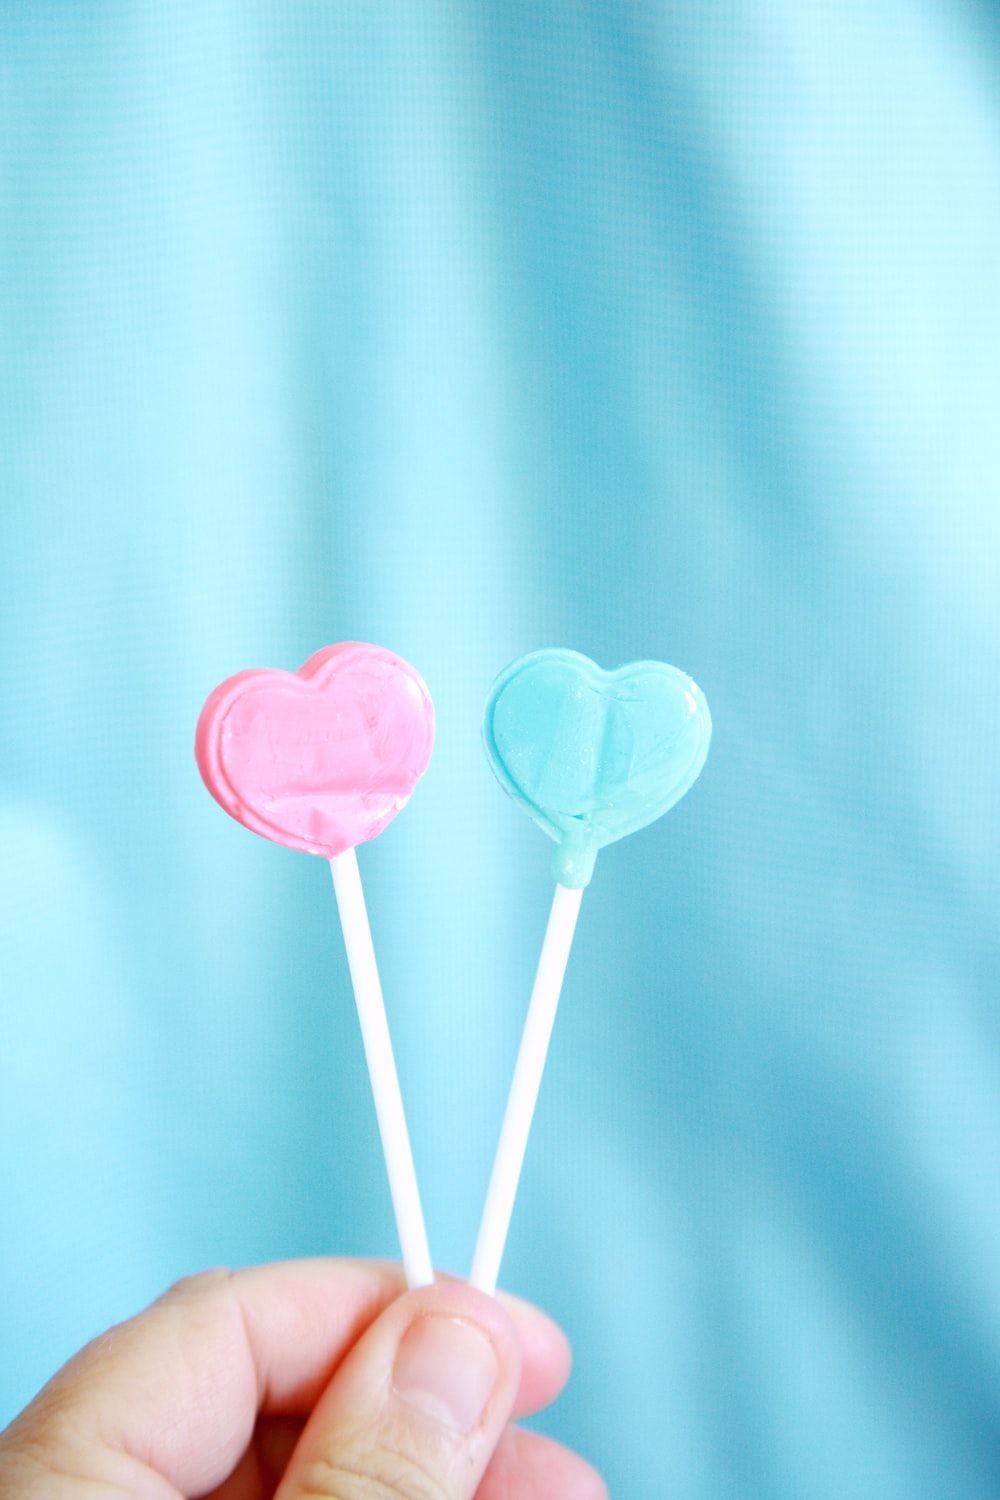 pink heart lollipop on white textile photo